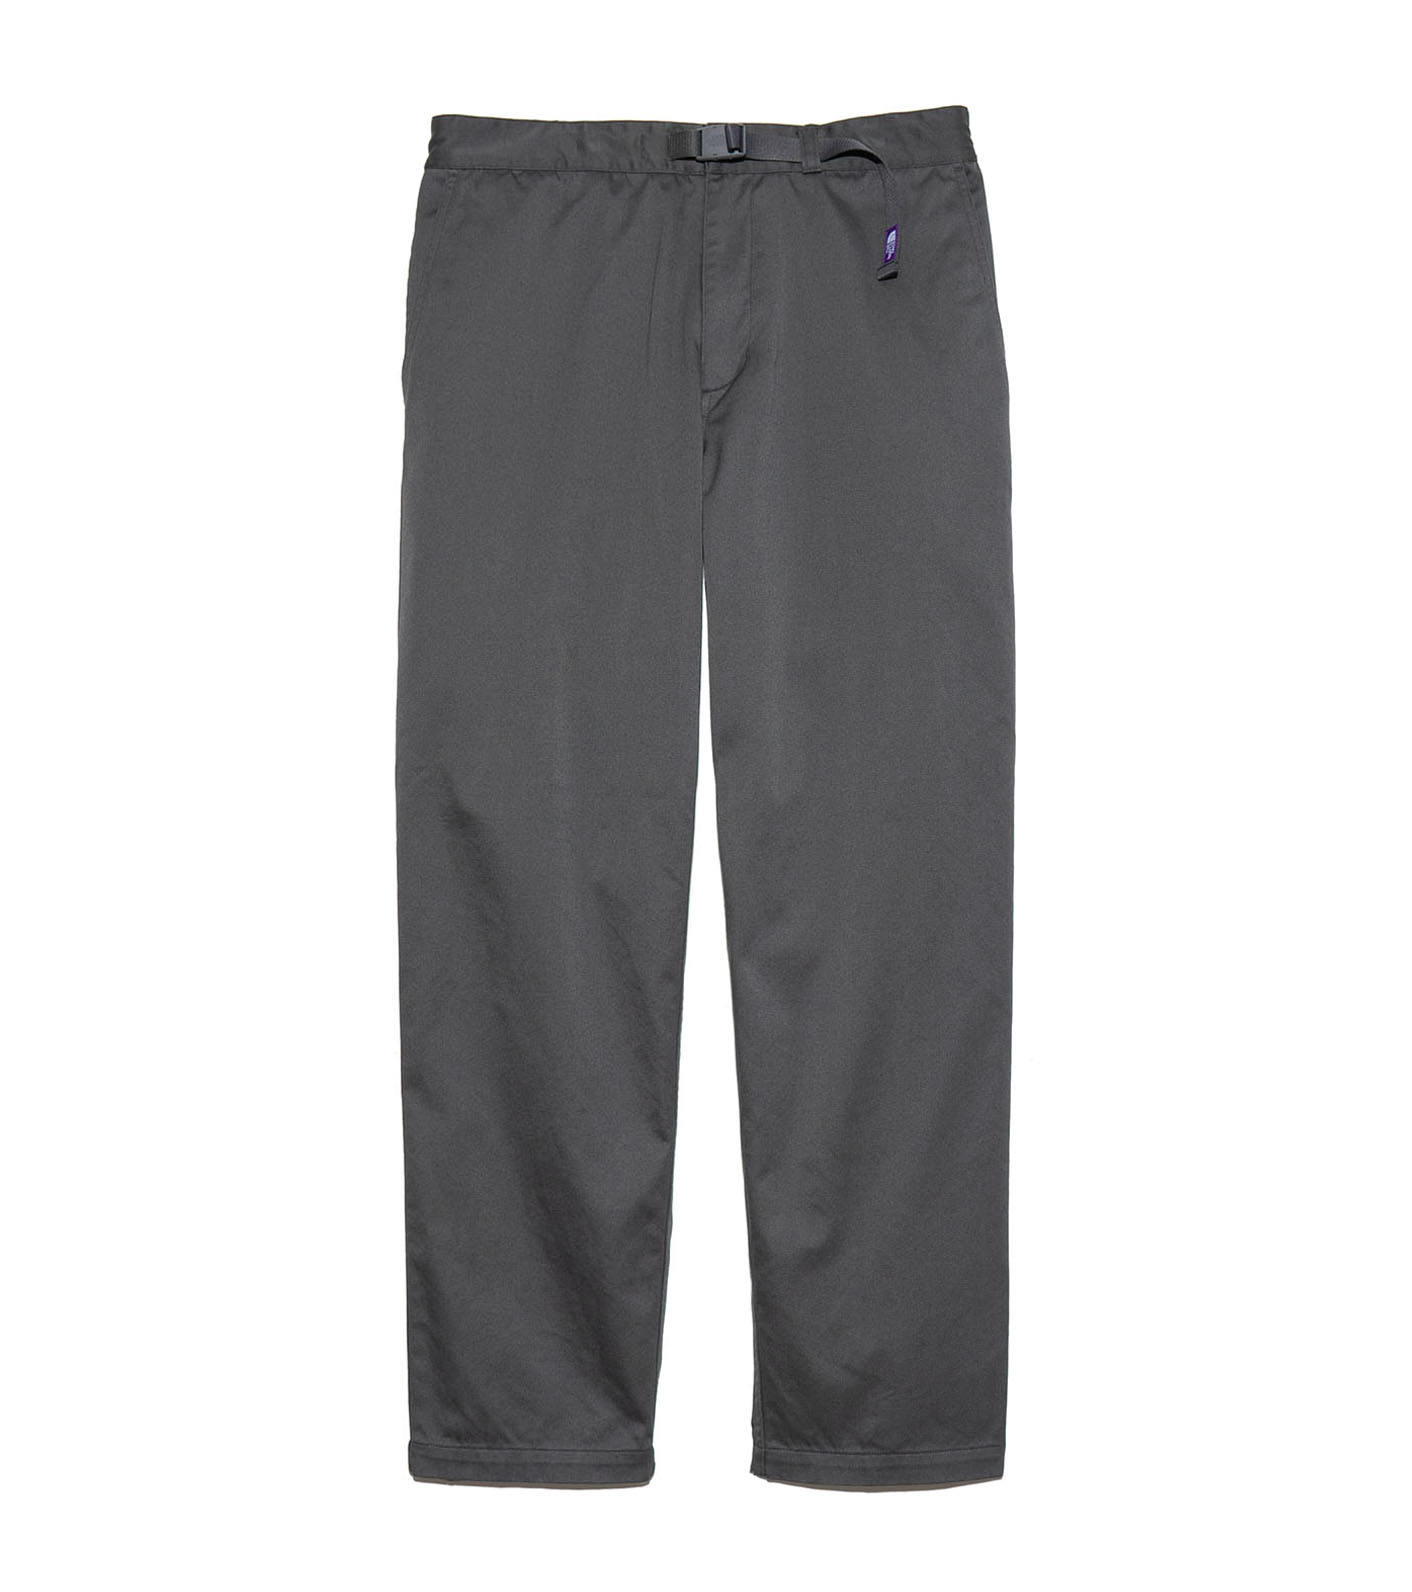 nanamica / Chino Straight Field Pants